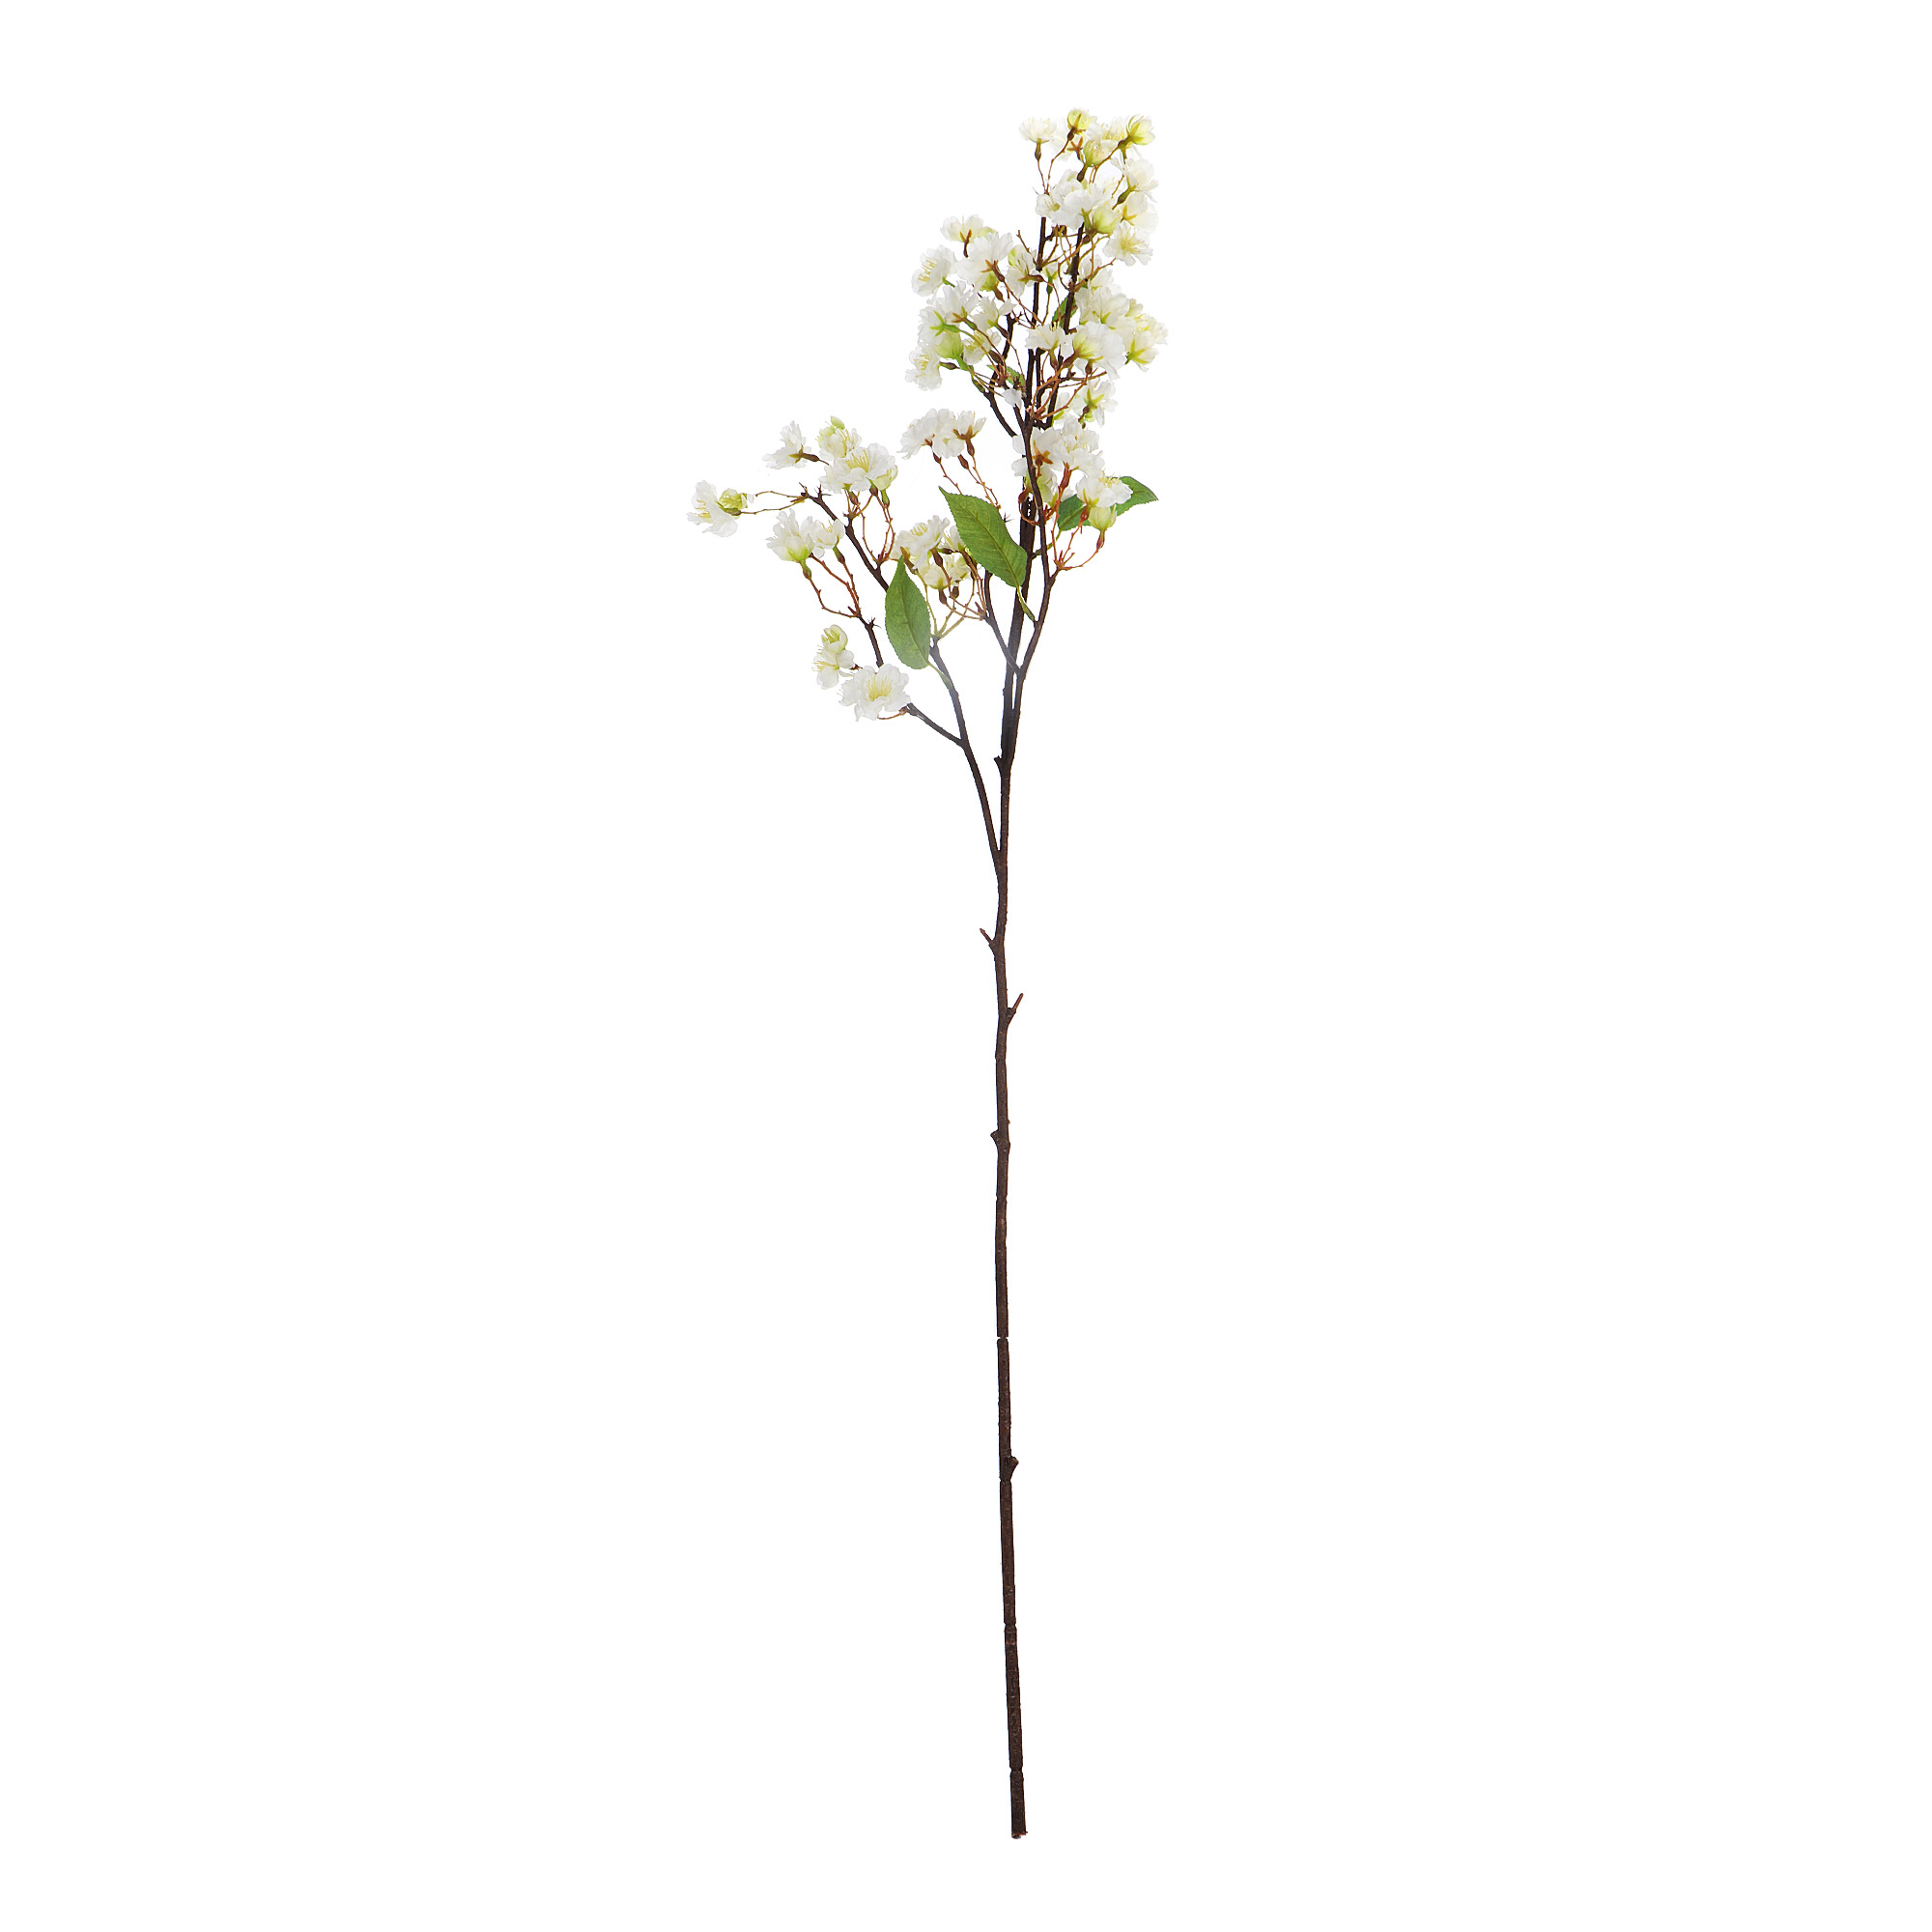 Ветка вишни белая Конэко-о высота 105 /40+65/ см ветка вишни белая конэко о высота 105 40 65 см